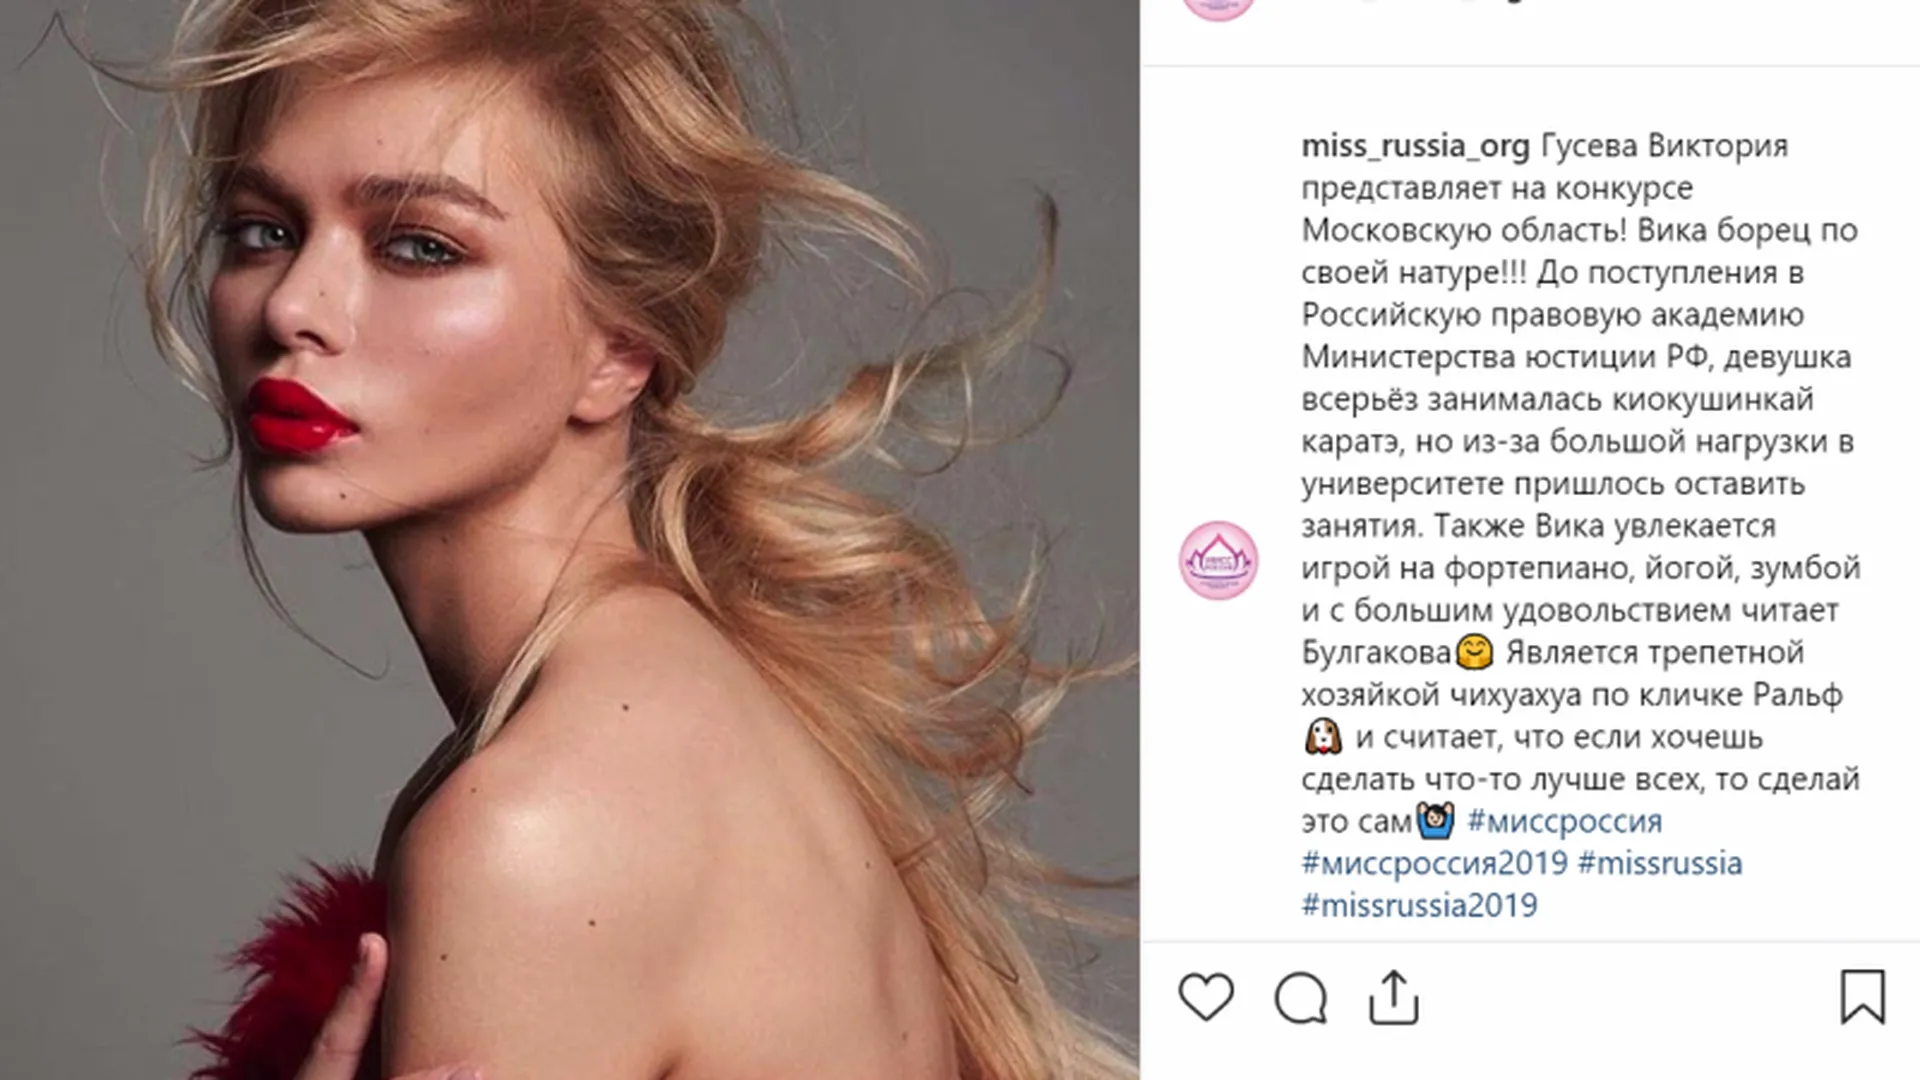 miss_russia_org/instagram.com